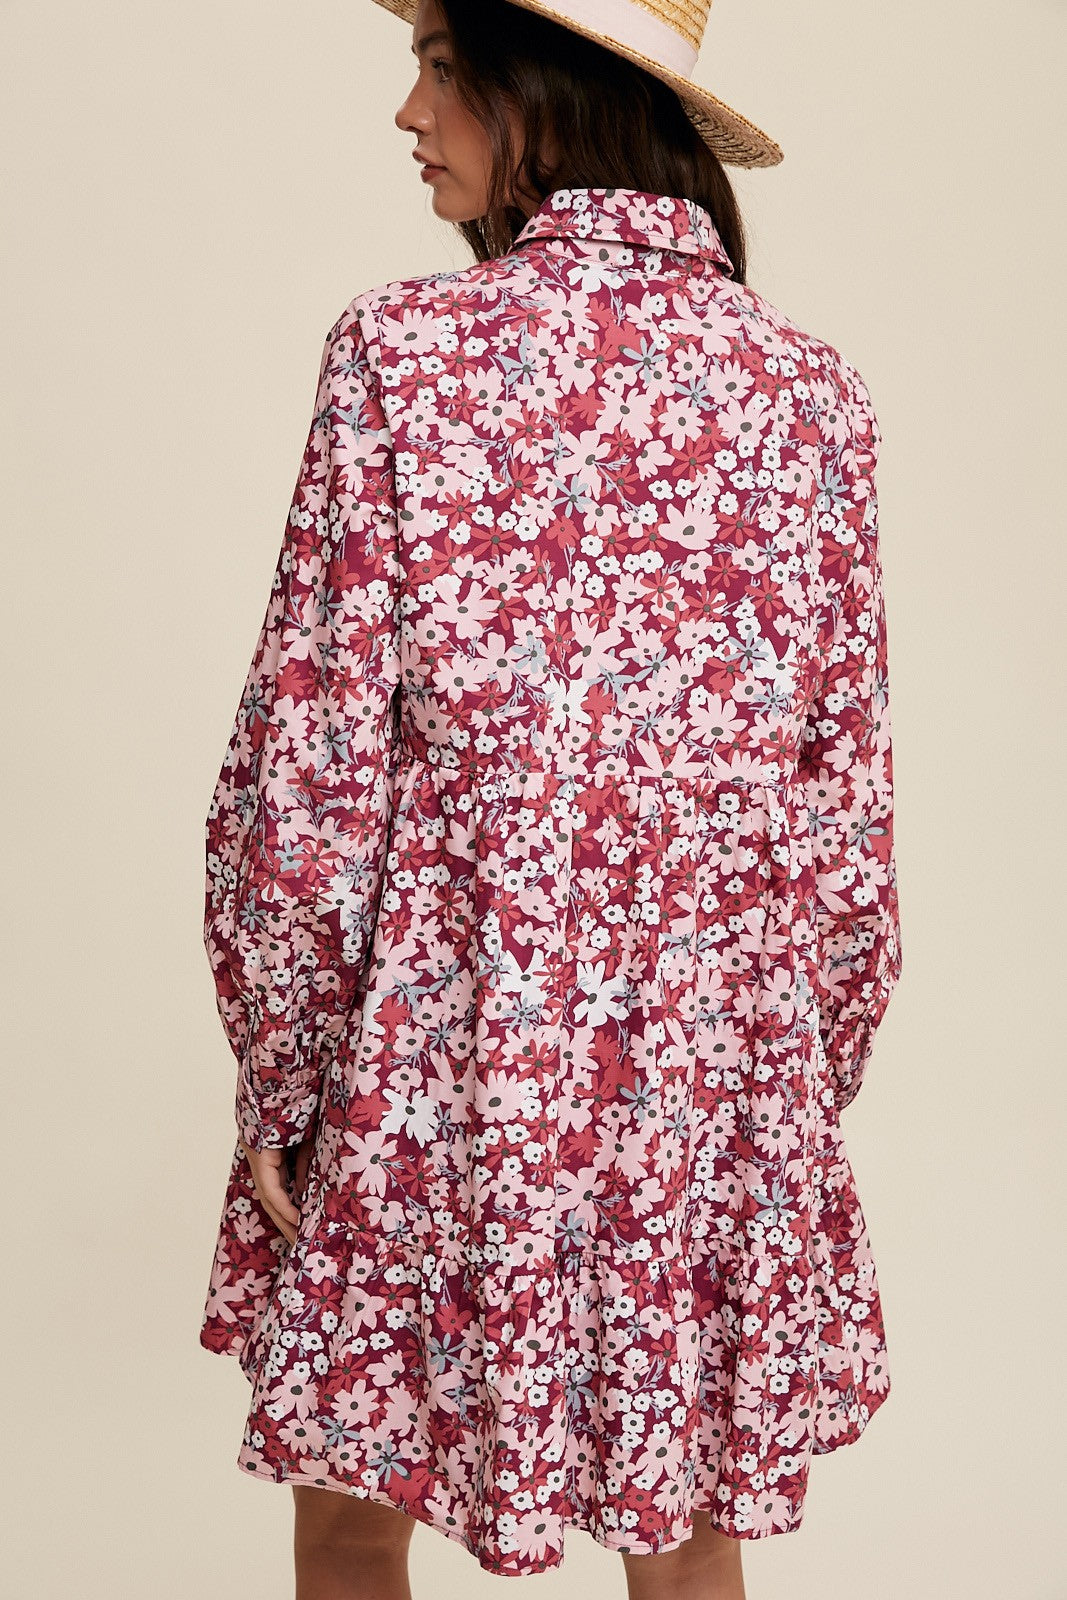 Magenta Floral Print Ruffle Shirt Poplin Dress